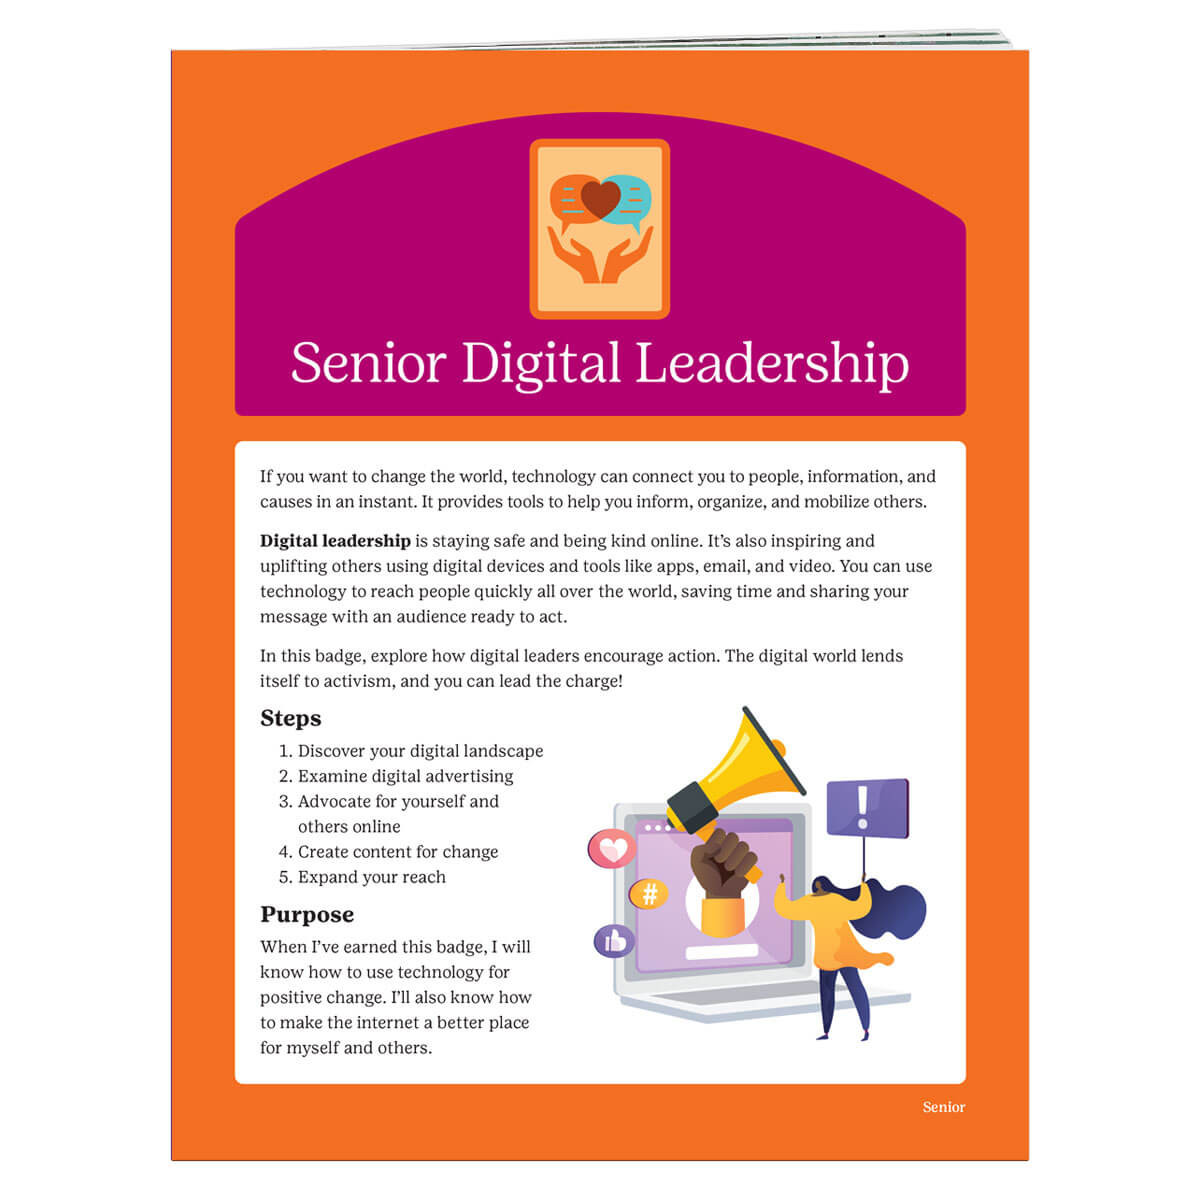 Sr. Digital Leadership REQ